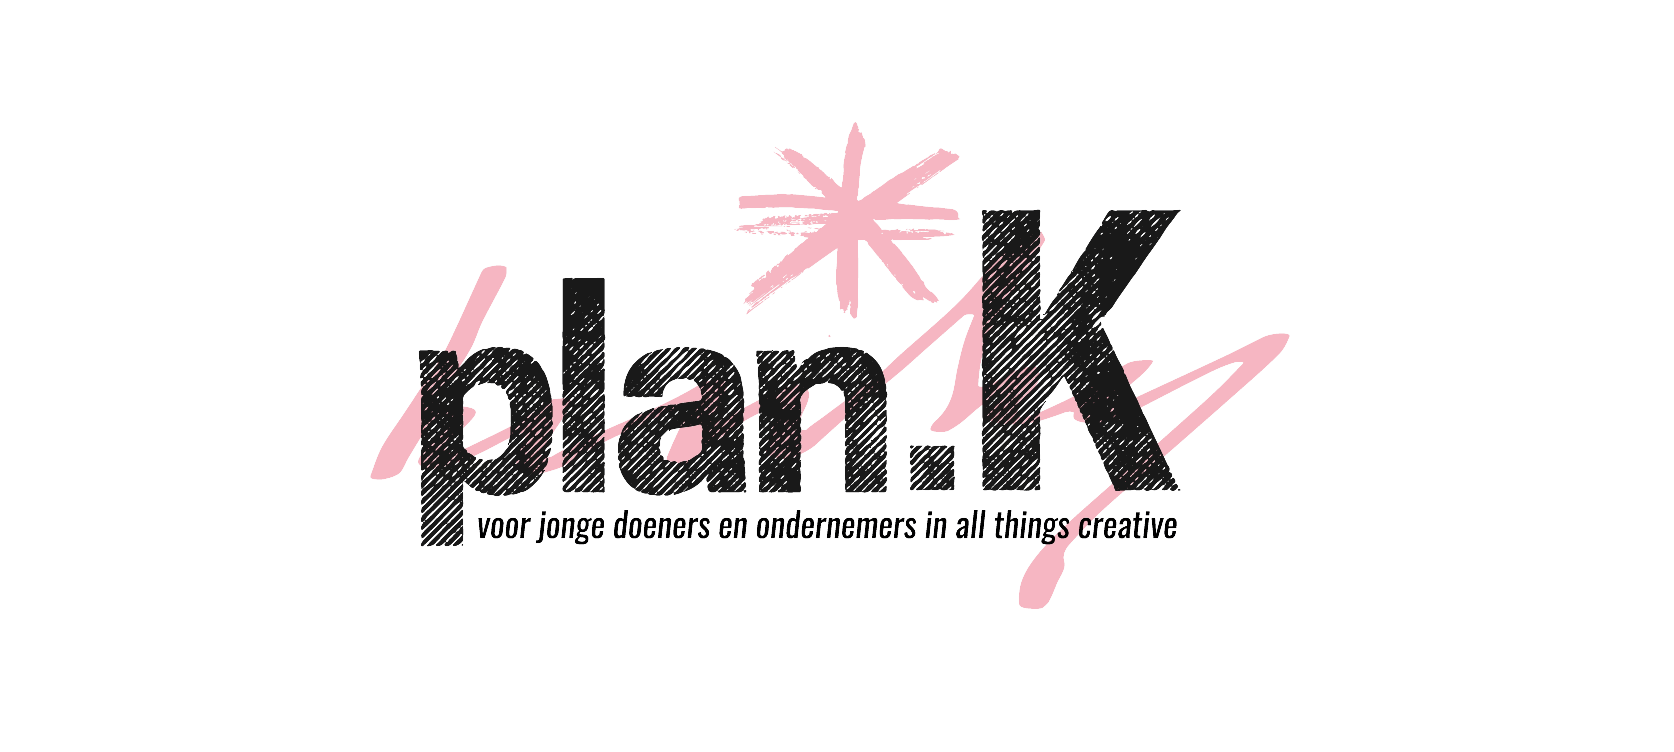 Het Plan K logo